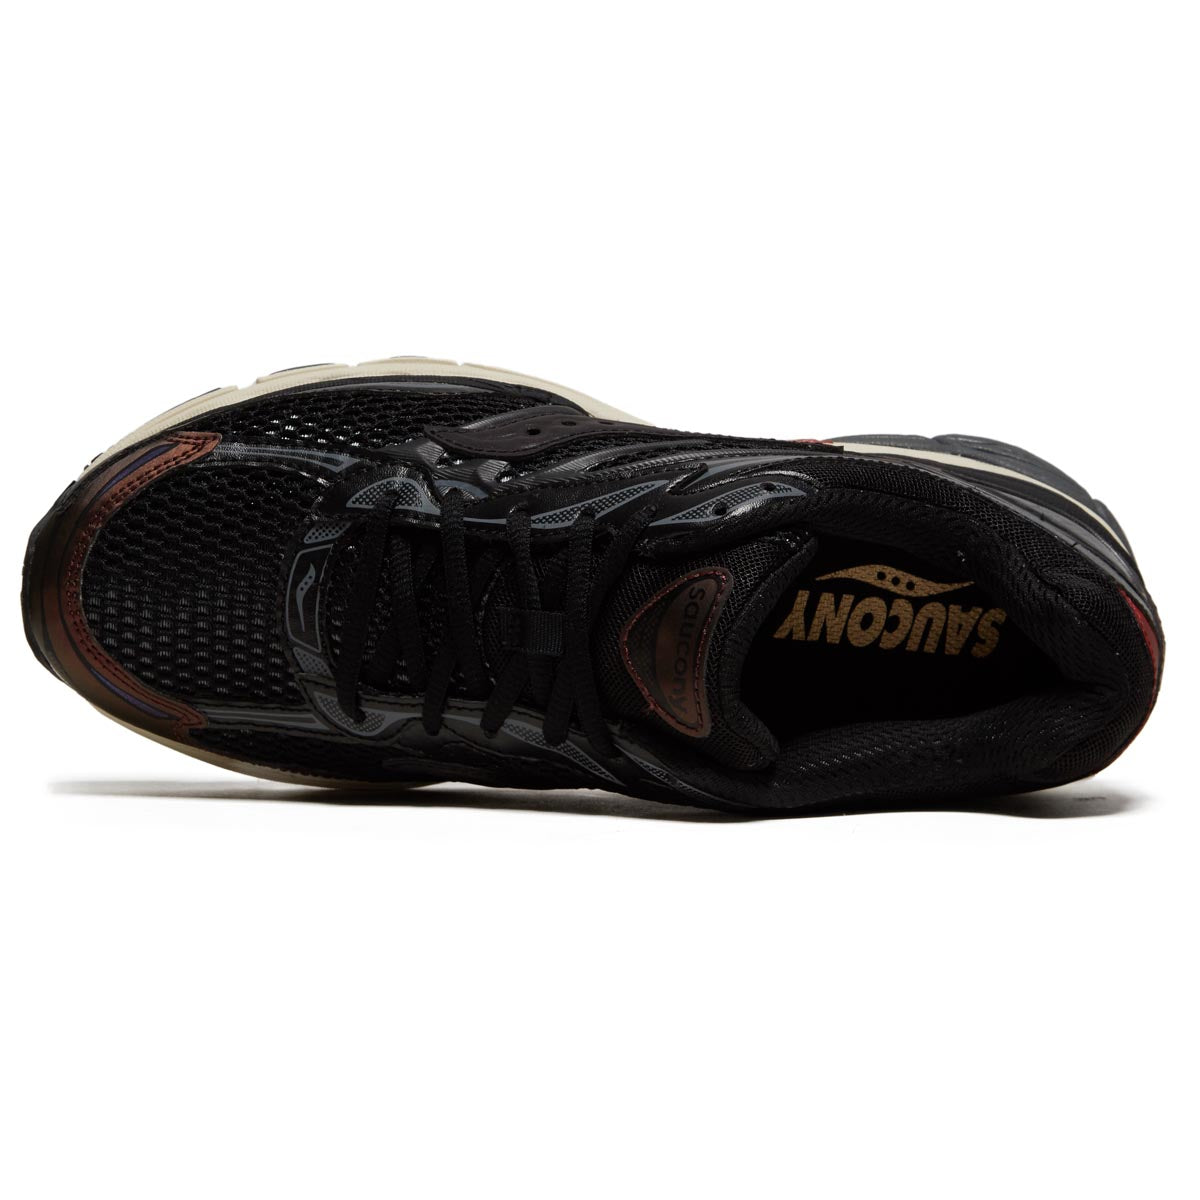 Saucony Progrid Omni 9 Shoes - Black/Brown image 3